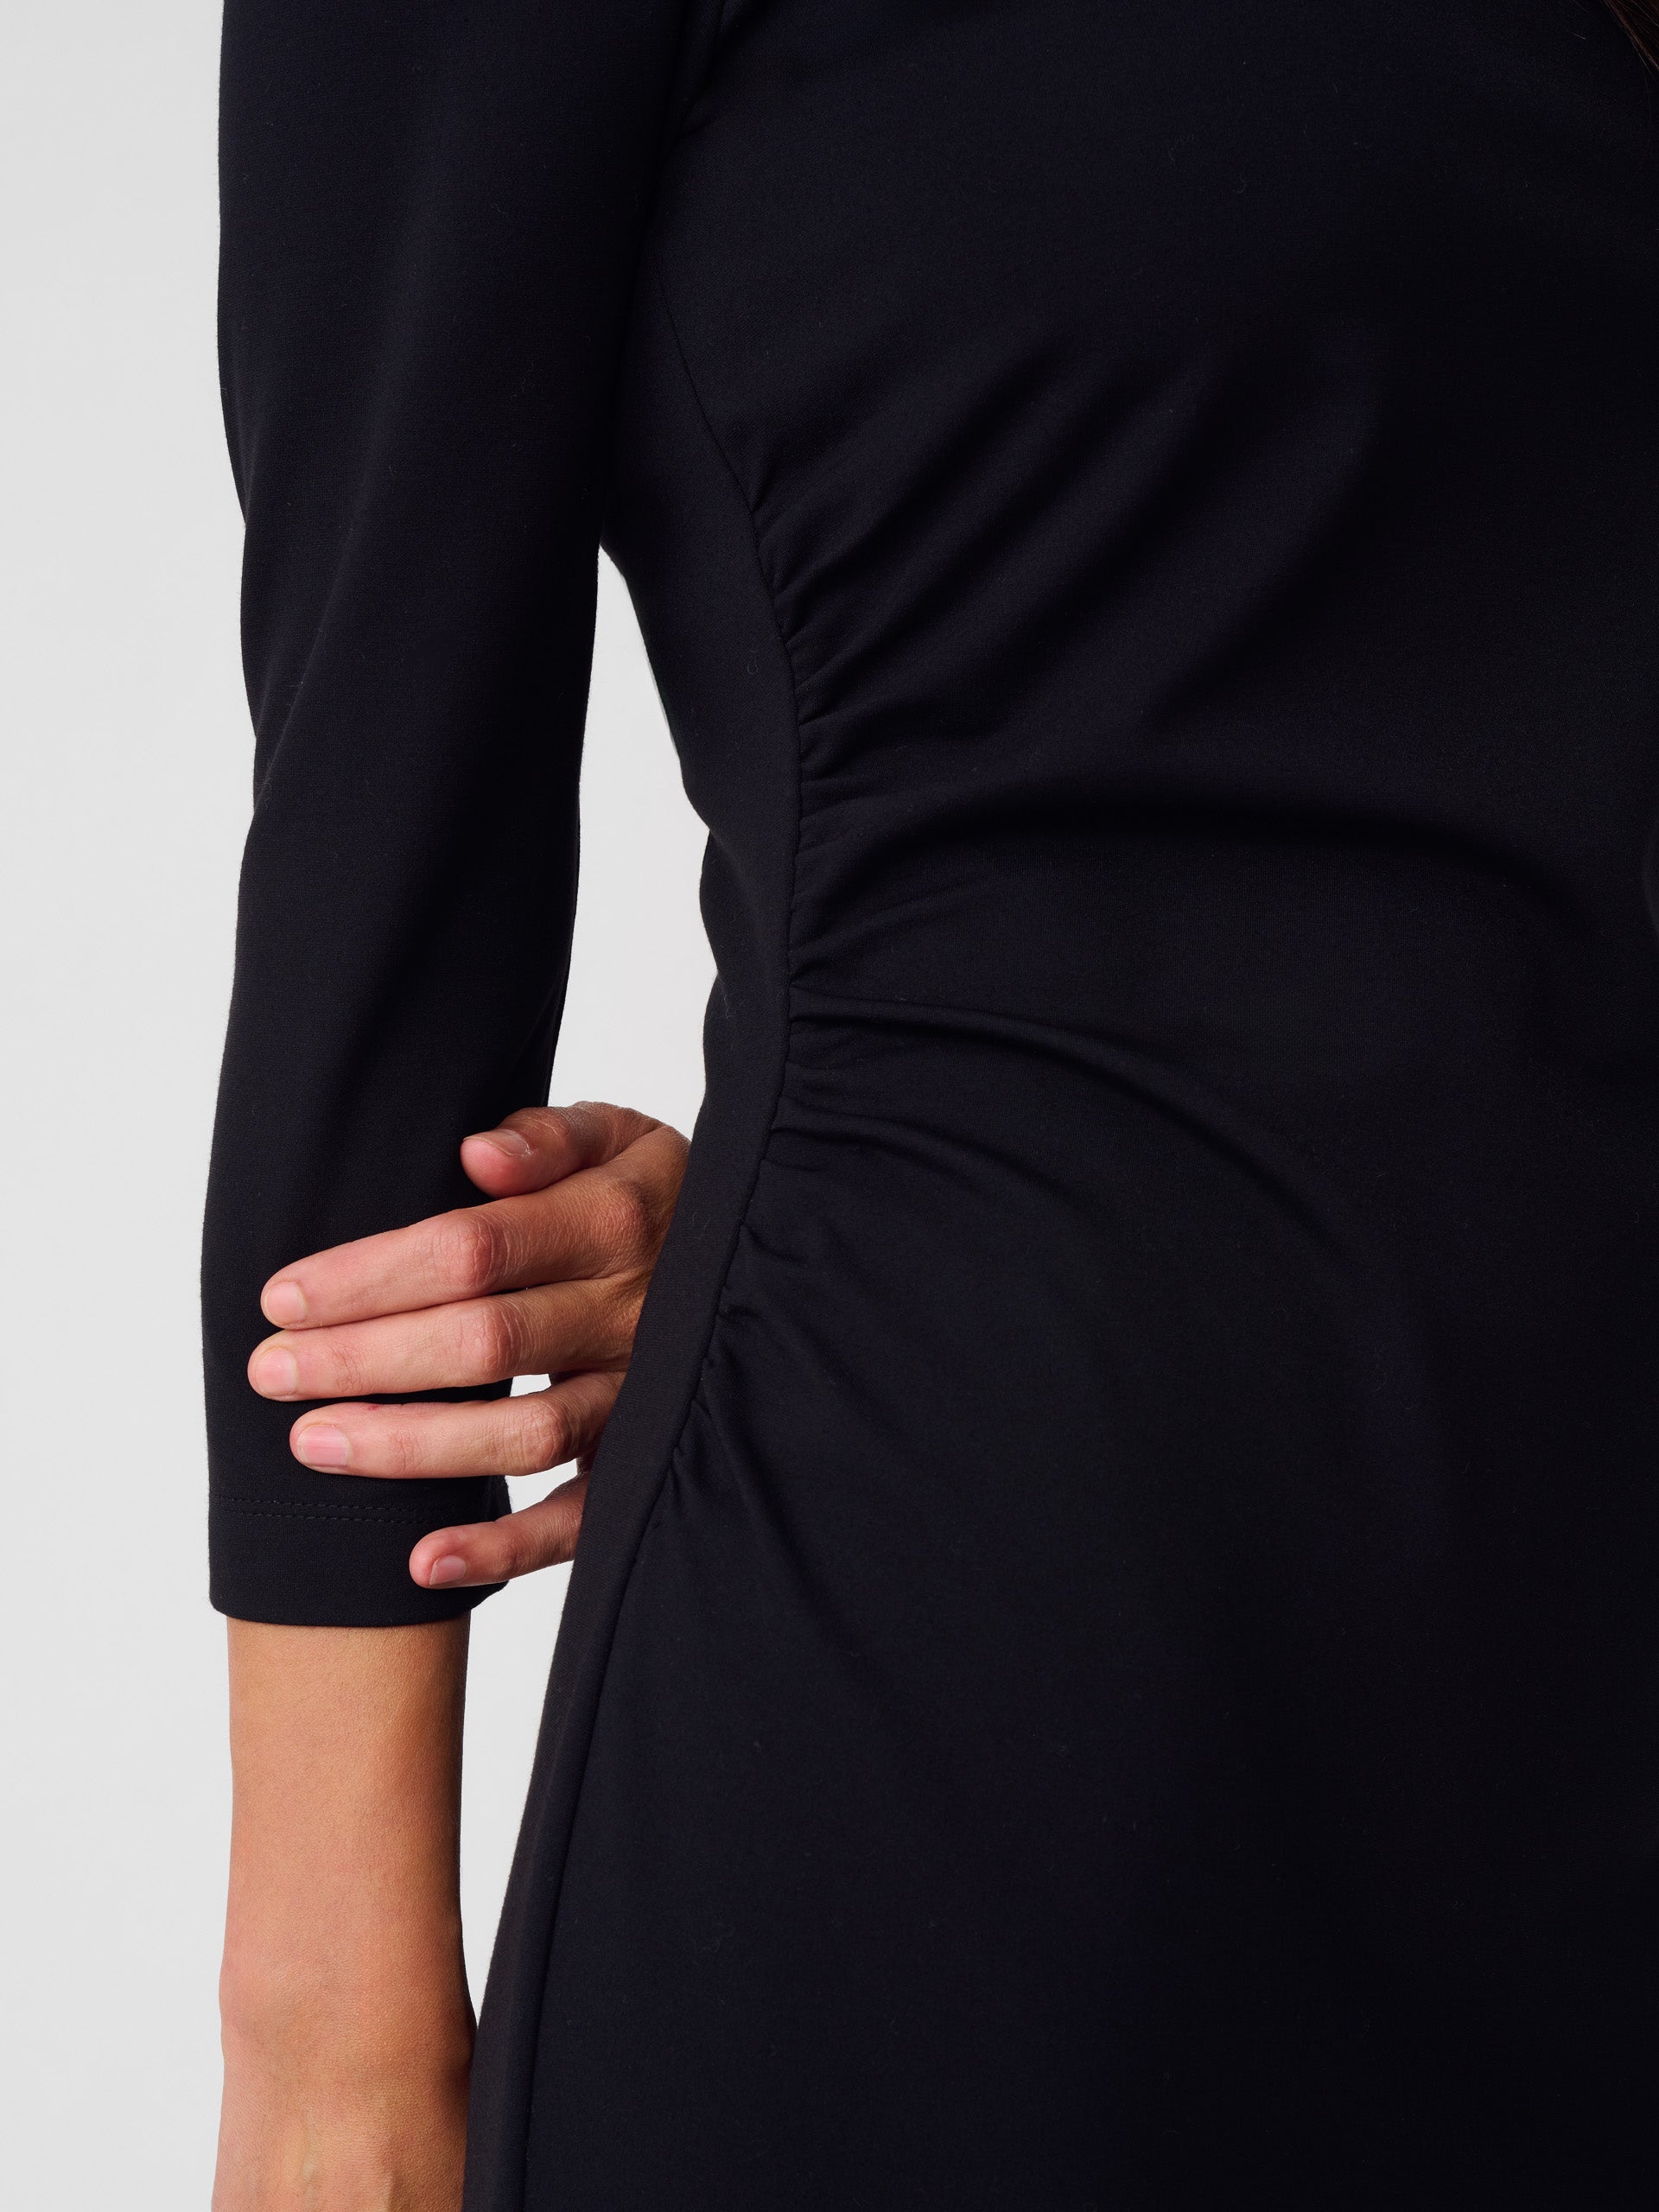 Model wearing J.McLaughlin Sarra dress in black made with refined bainbridge fabric.